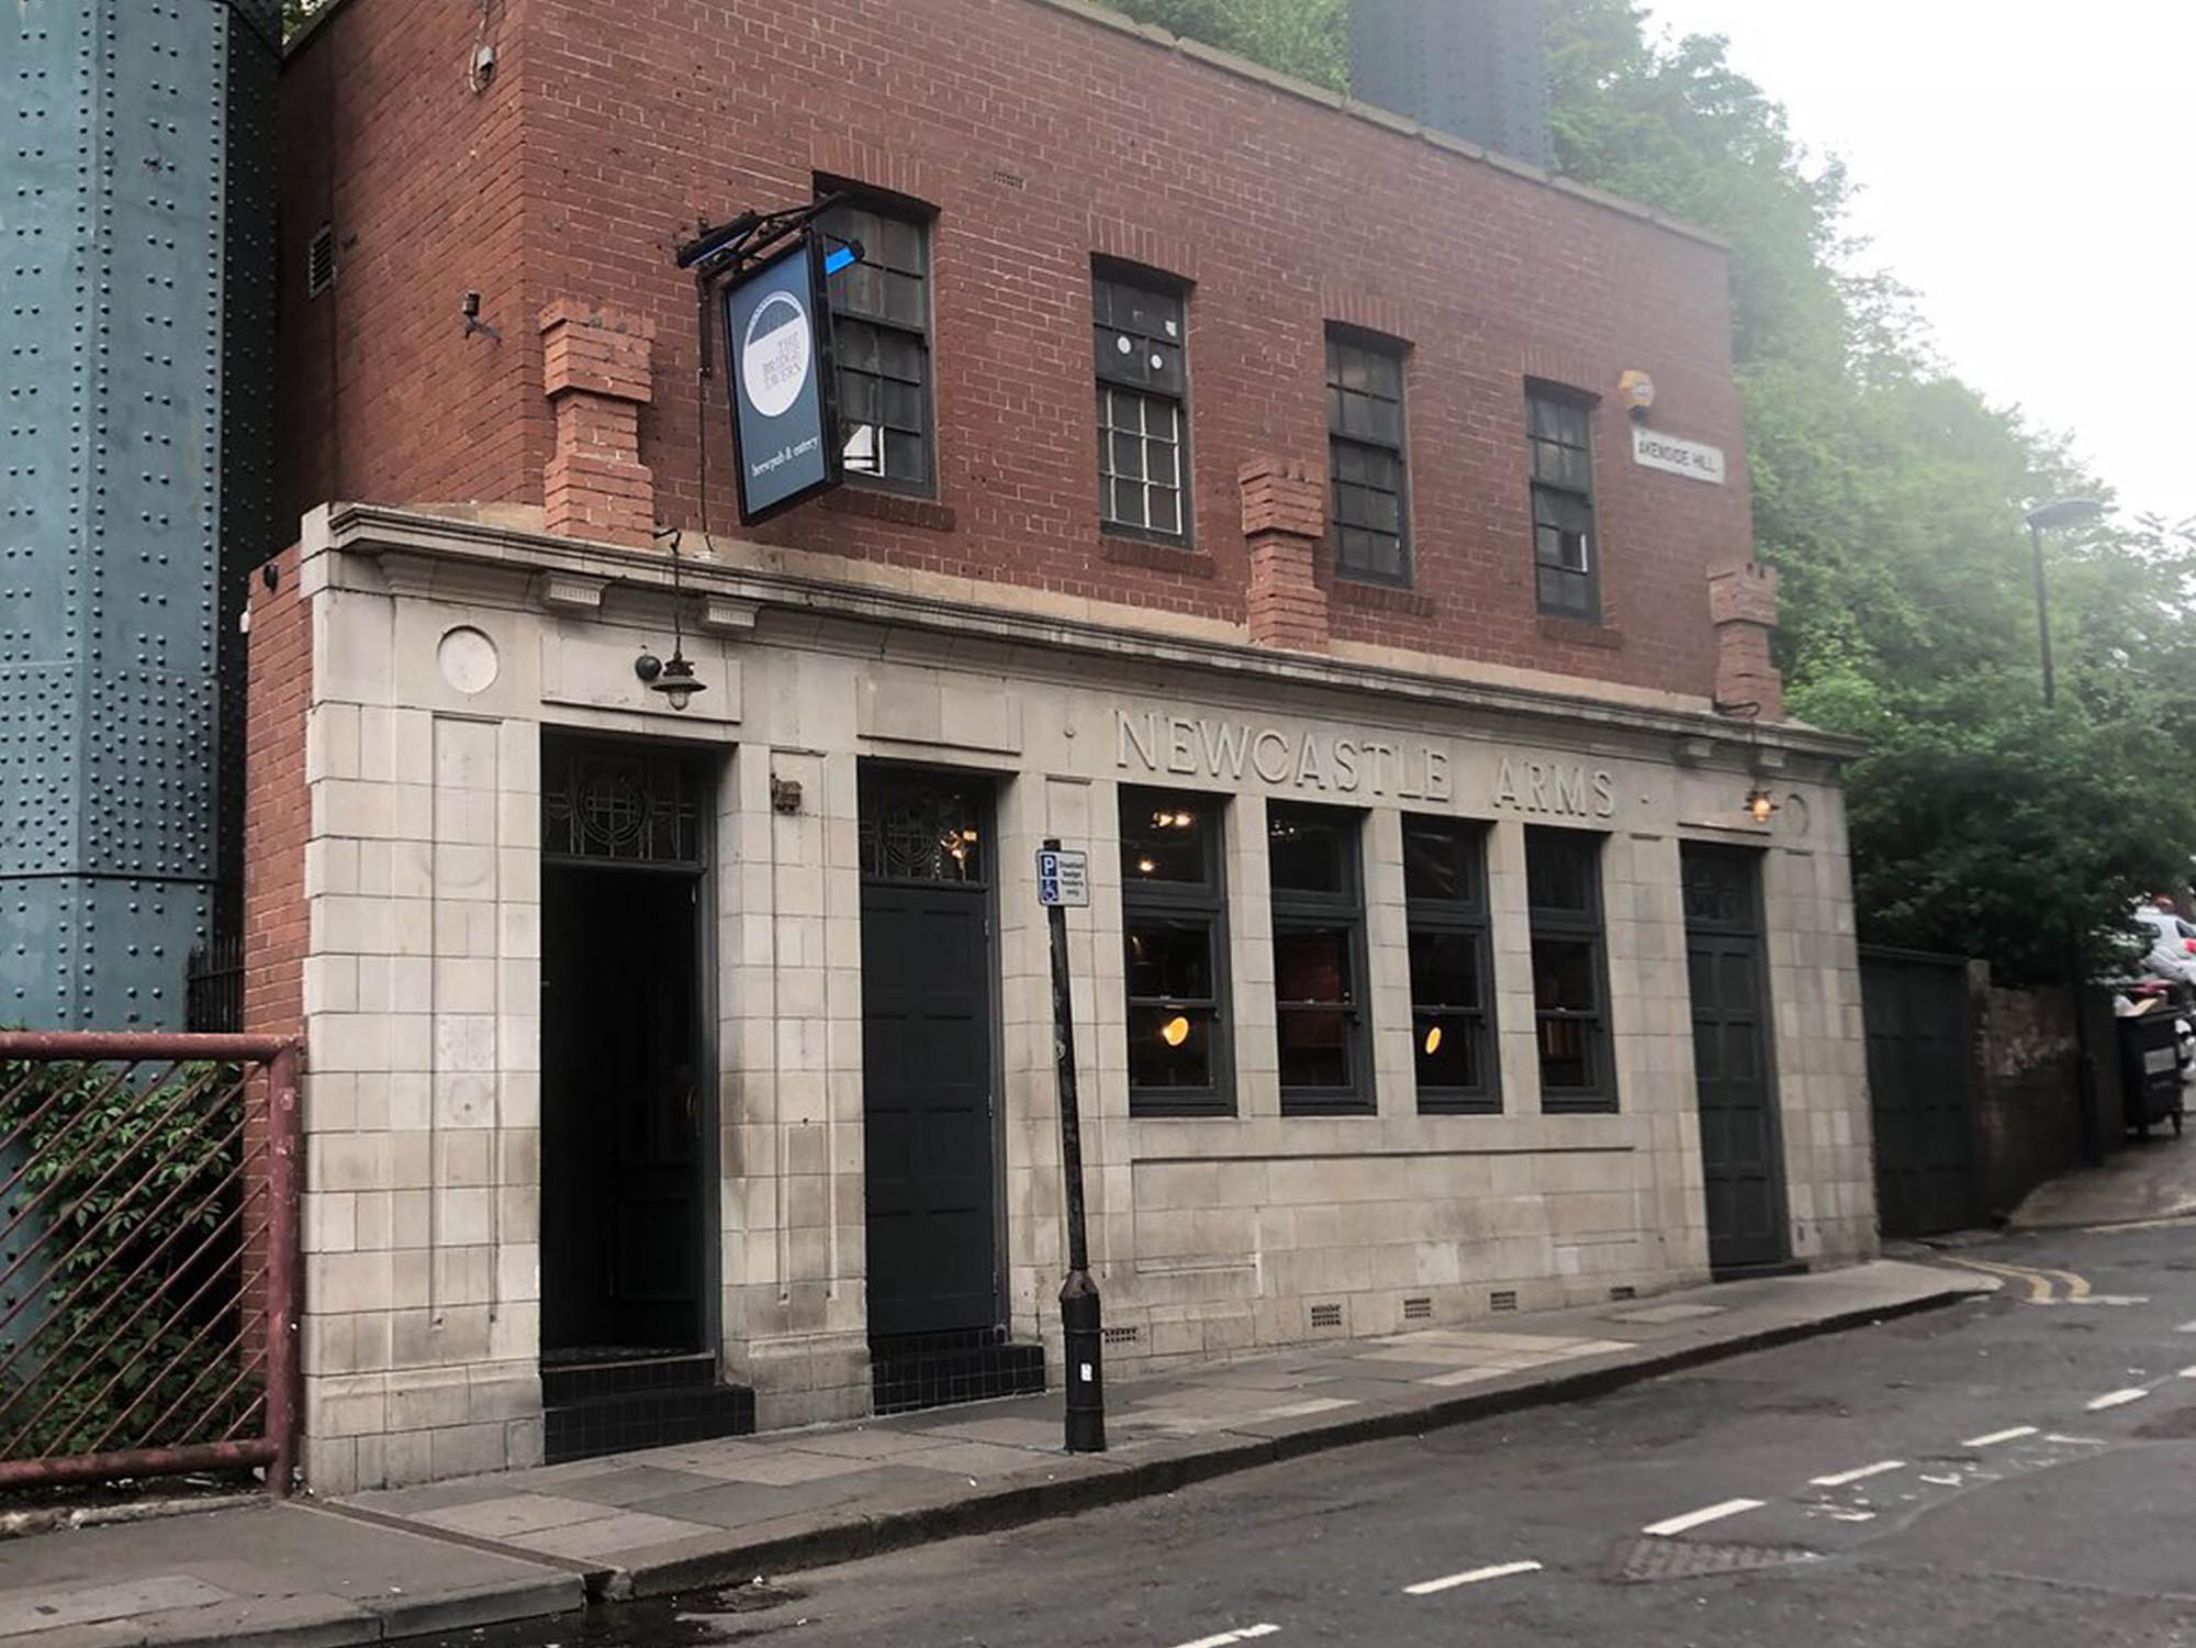 Best Pubs in Newcastle - The Bridge Tavern